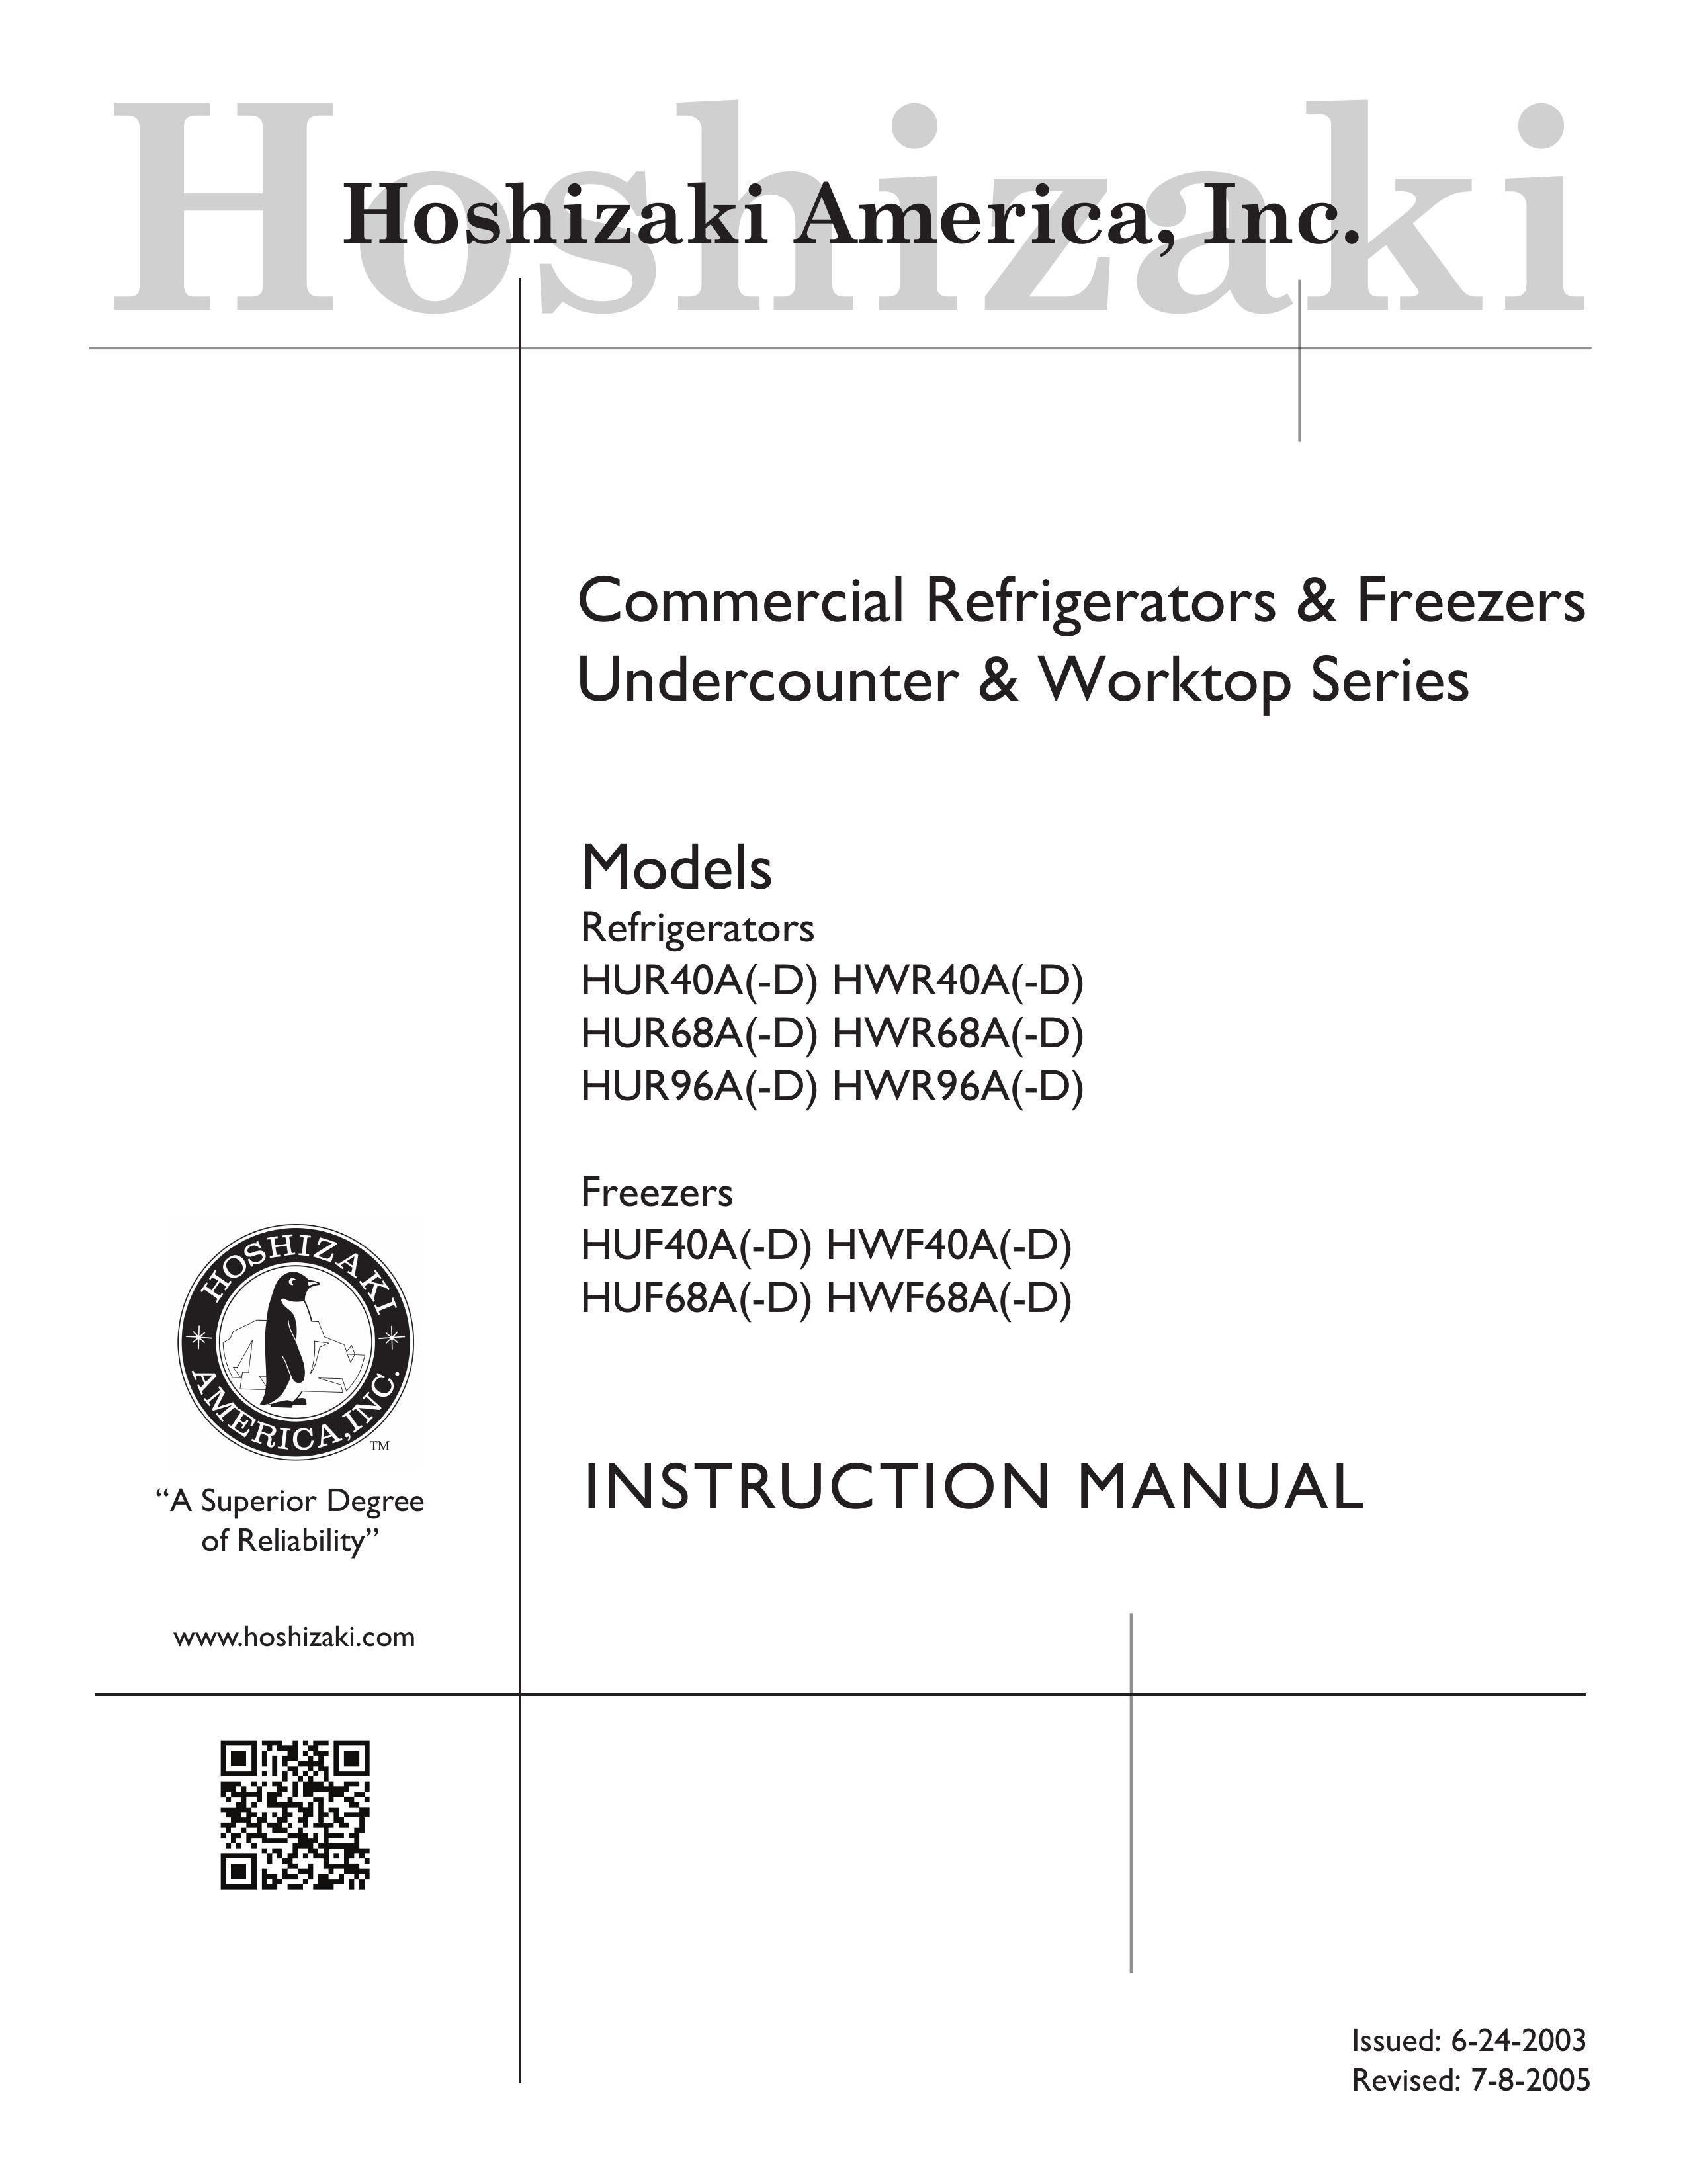 Hoshizaki hur96a Refrigerator User Manual